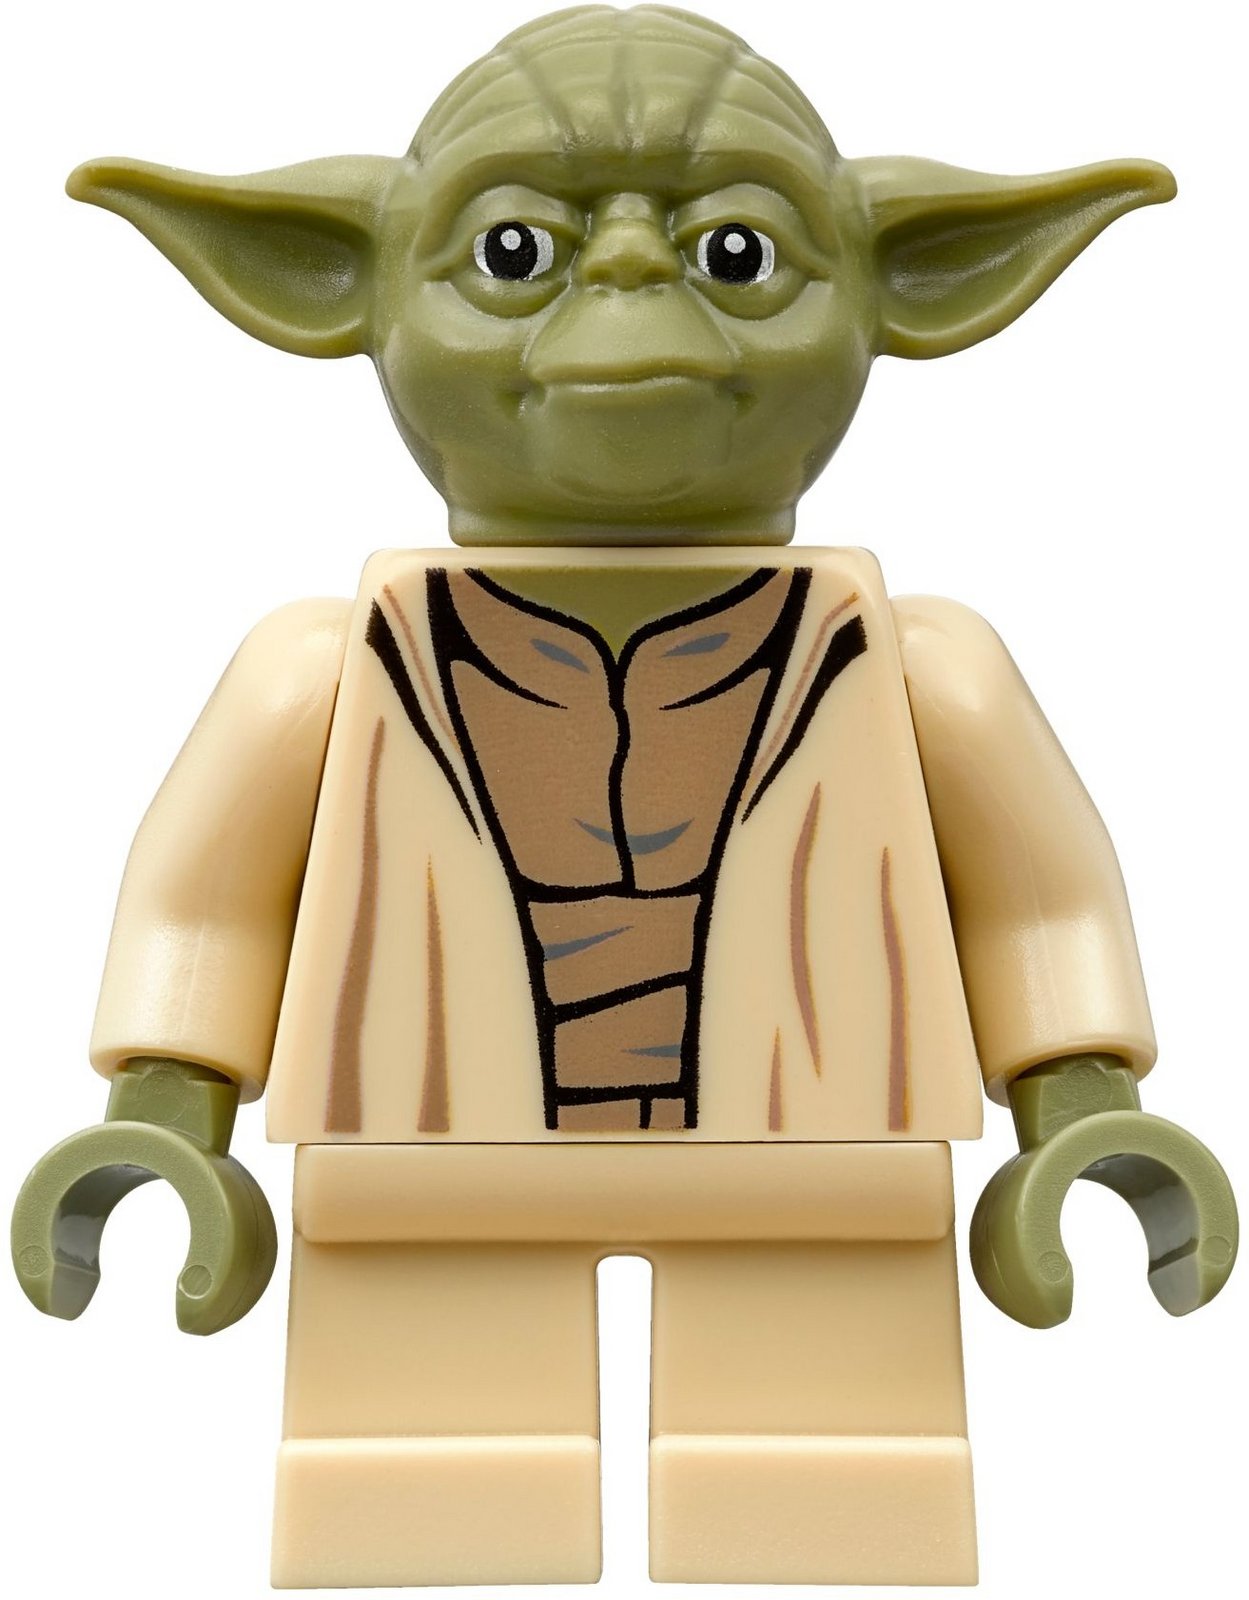 Lego Star Wars Master Yoda Minifigure With Green Lightsaber 